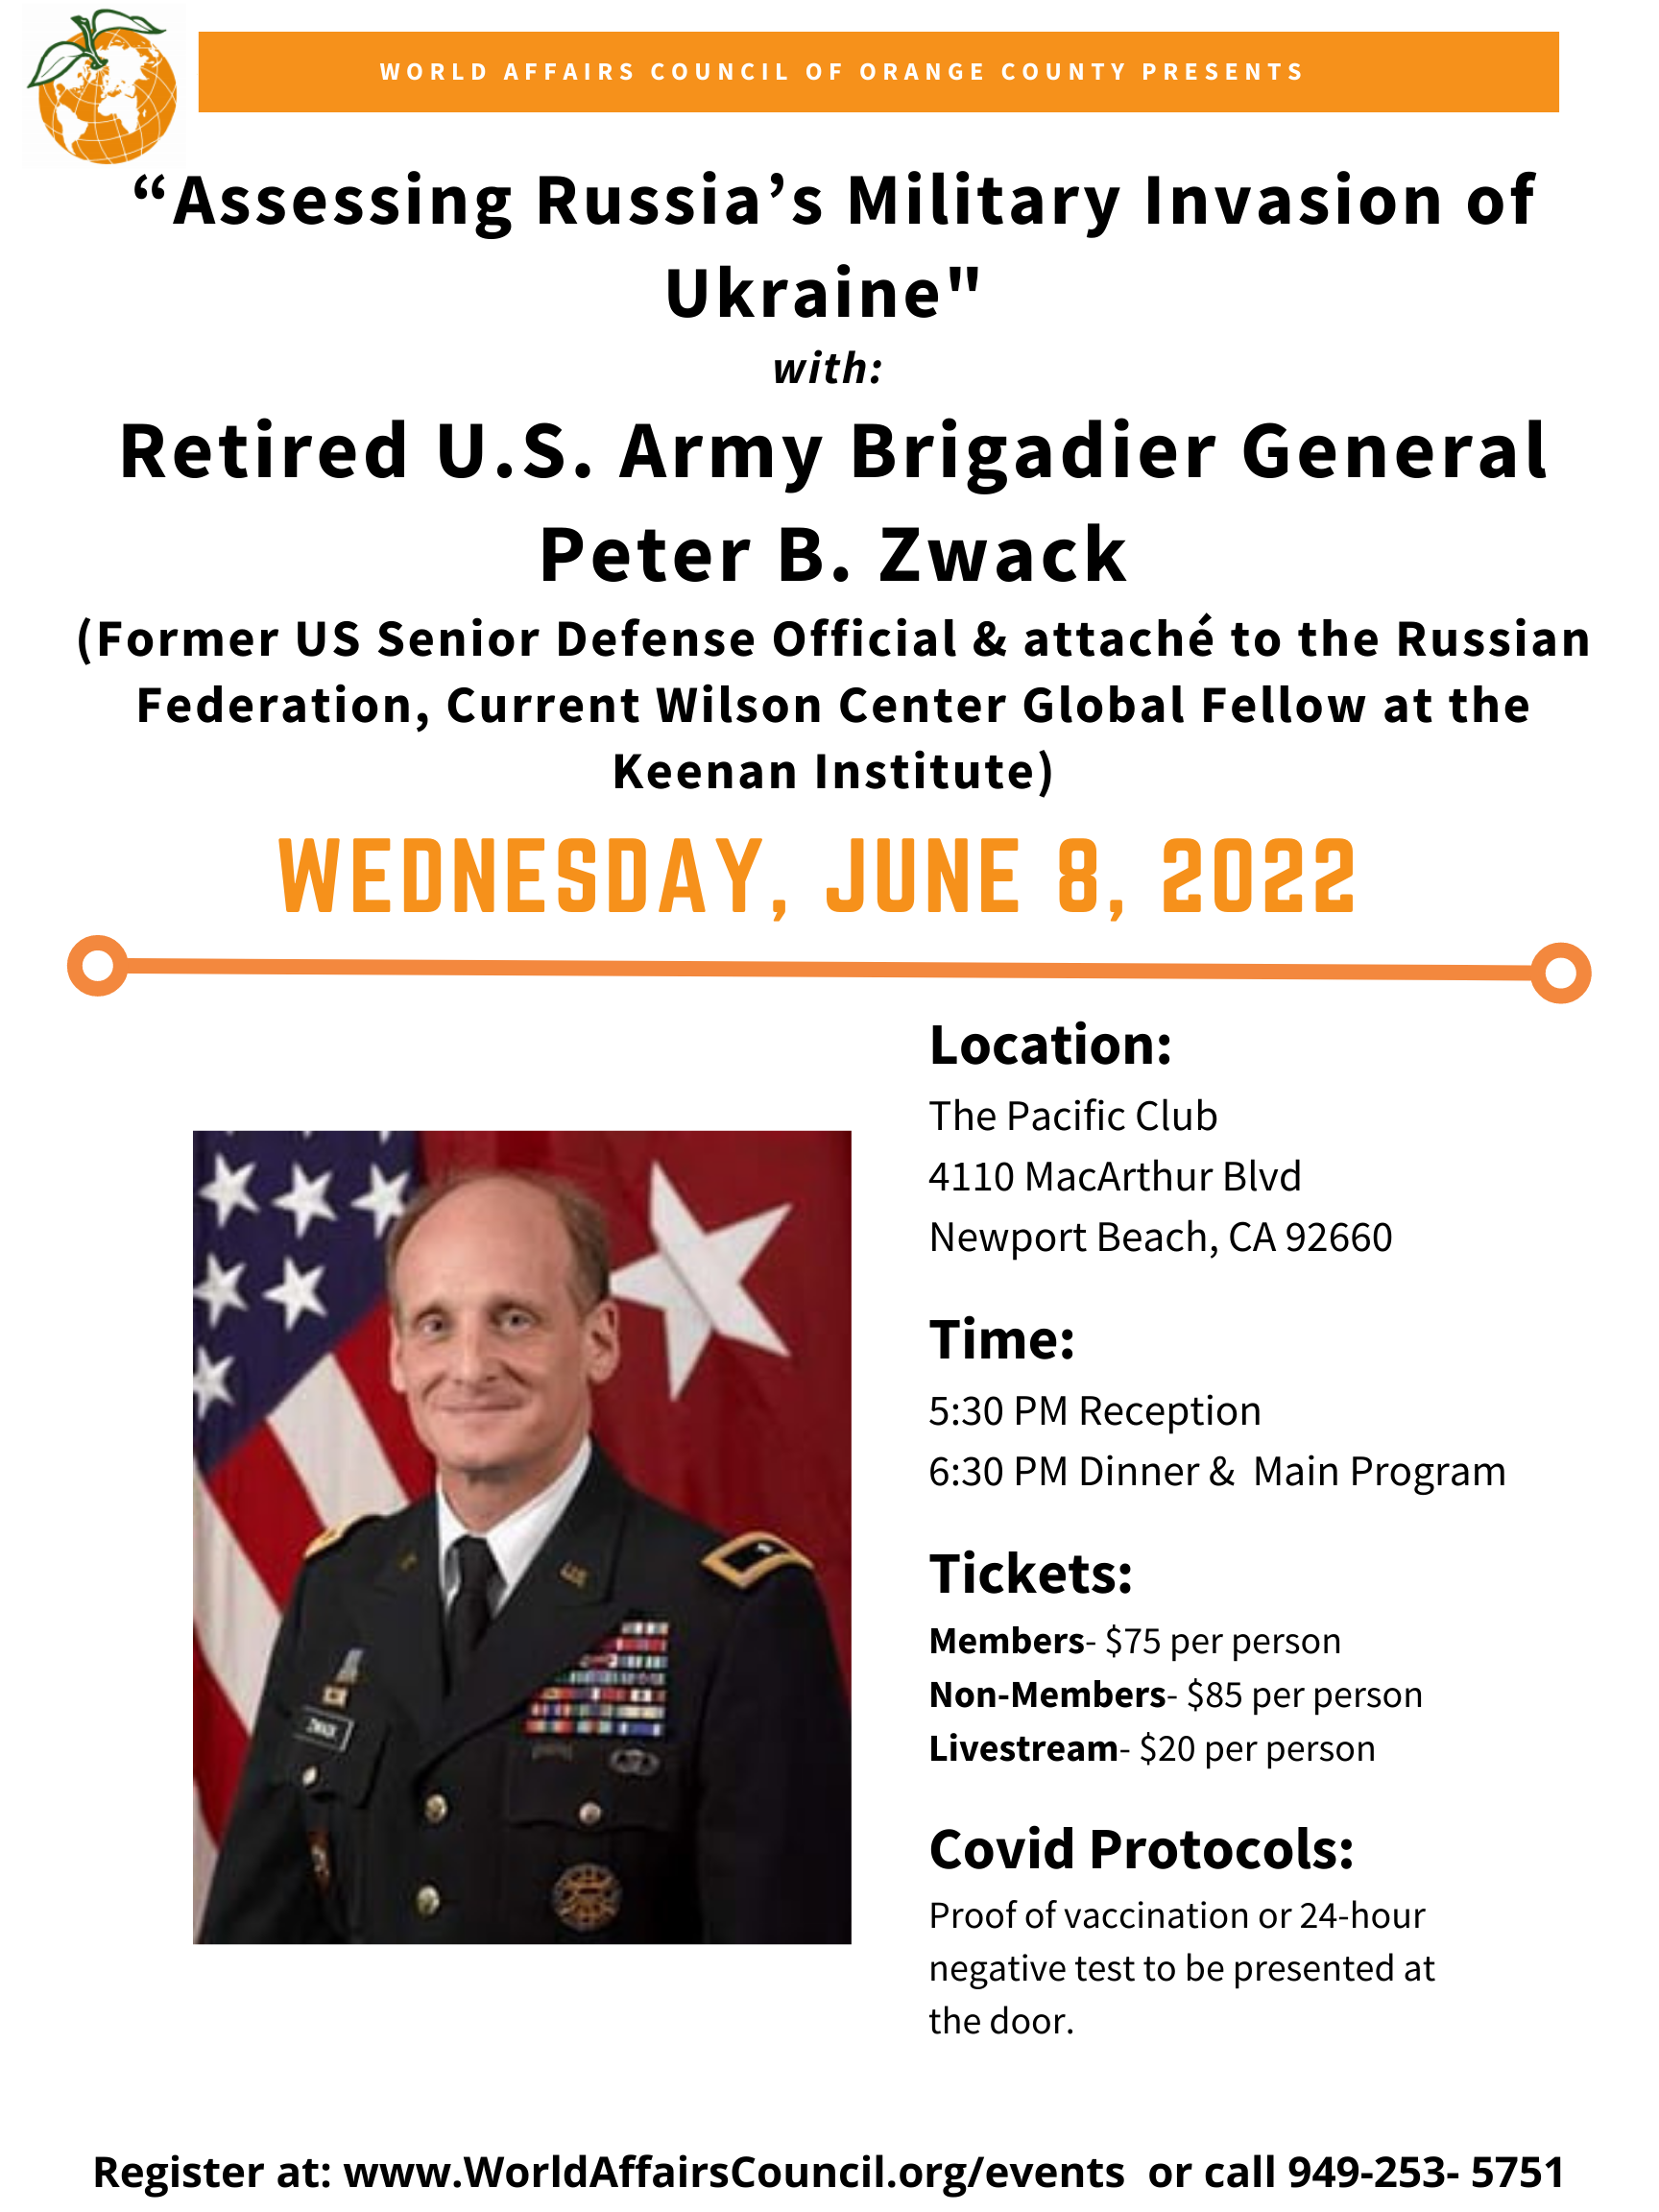 “Assessing Russia’s Military Invasion of Ukraine" with Retired U.S. Army Brigadier General Peter B. Zwack